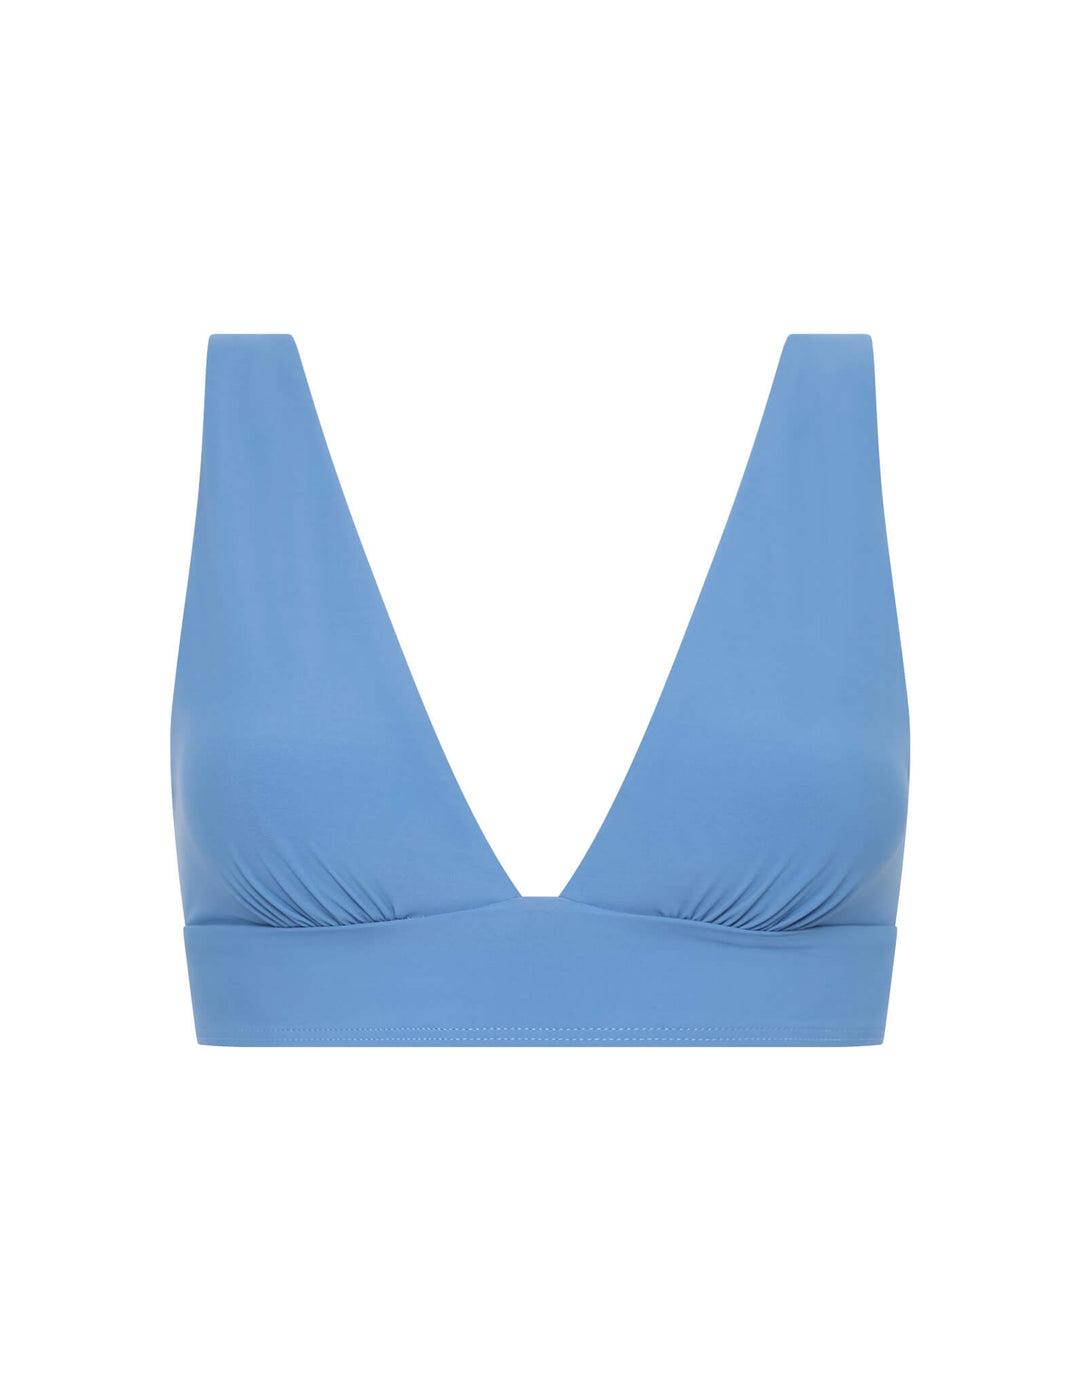 Bondi Born Amelia Bikini Top - Delft Blue